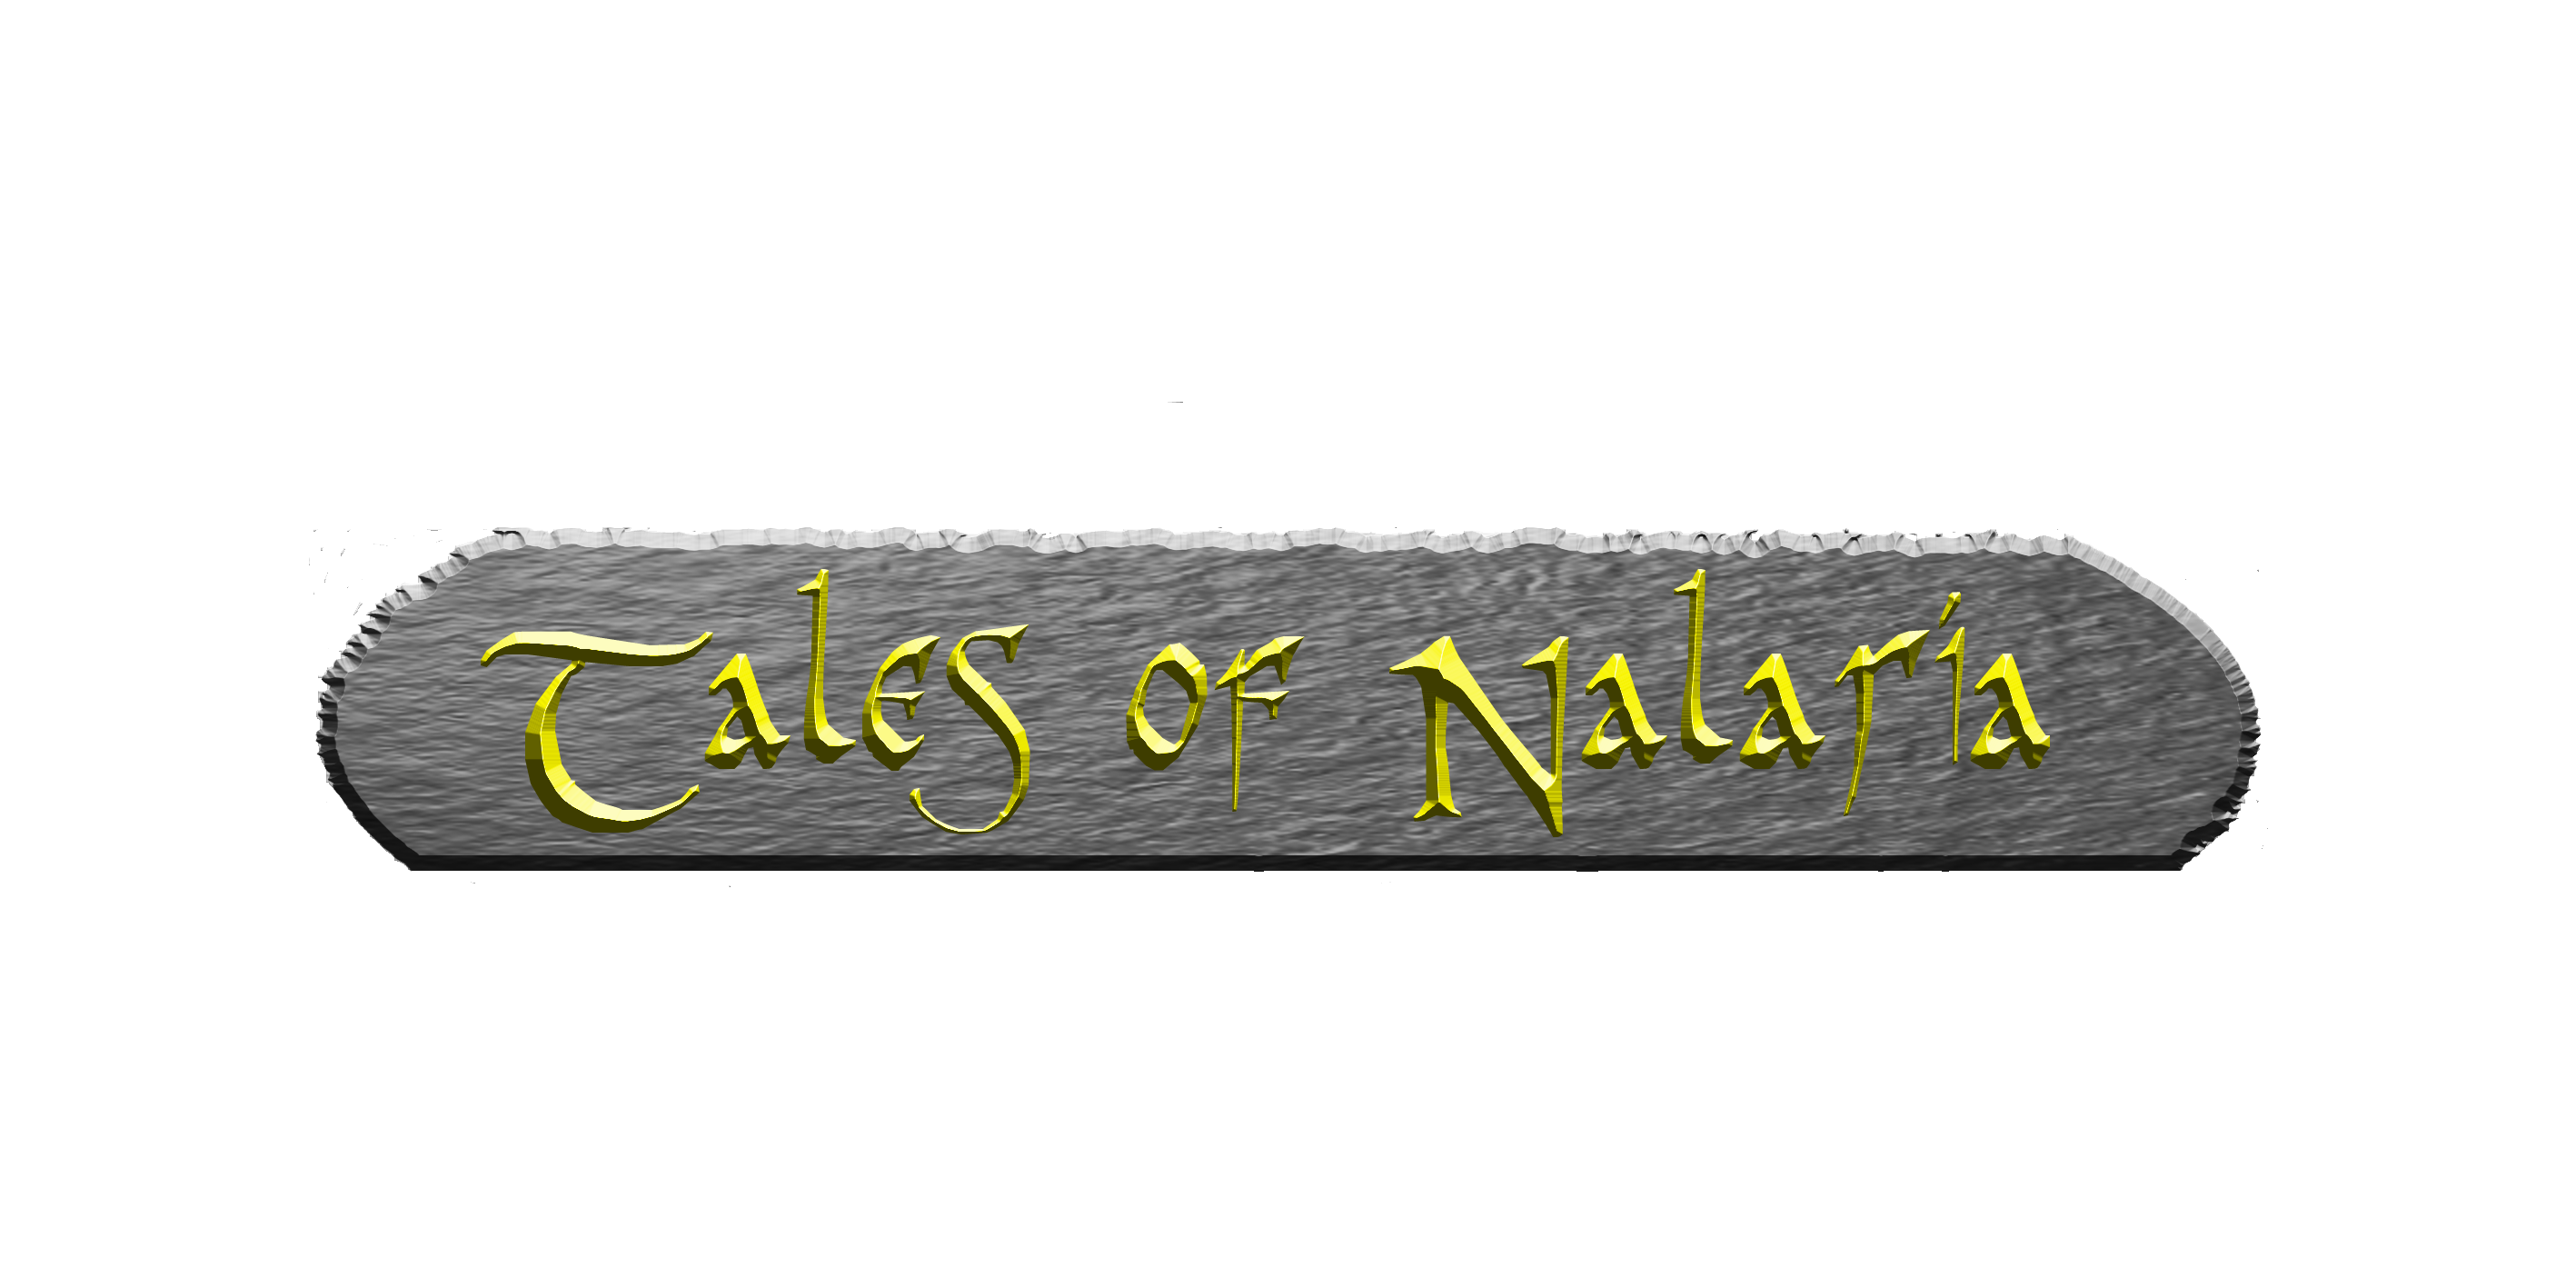 Tales of Nalaria1